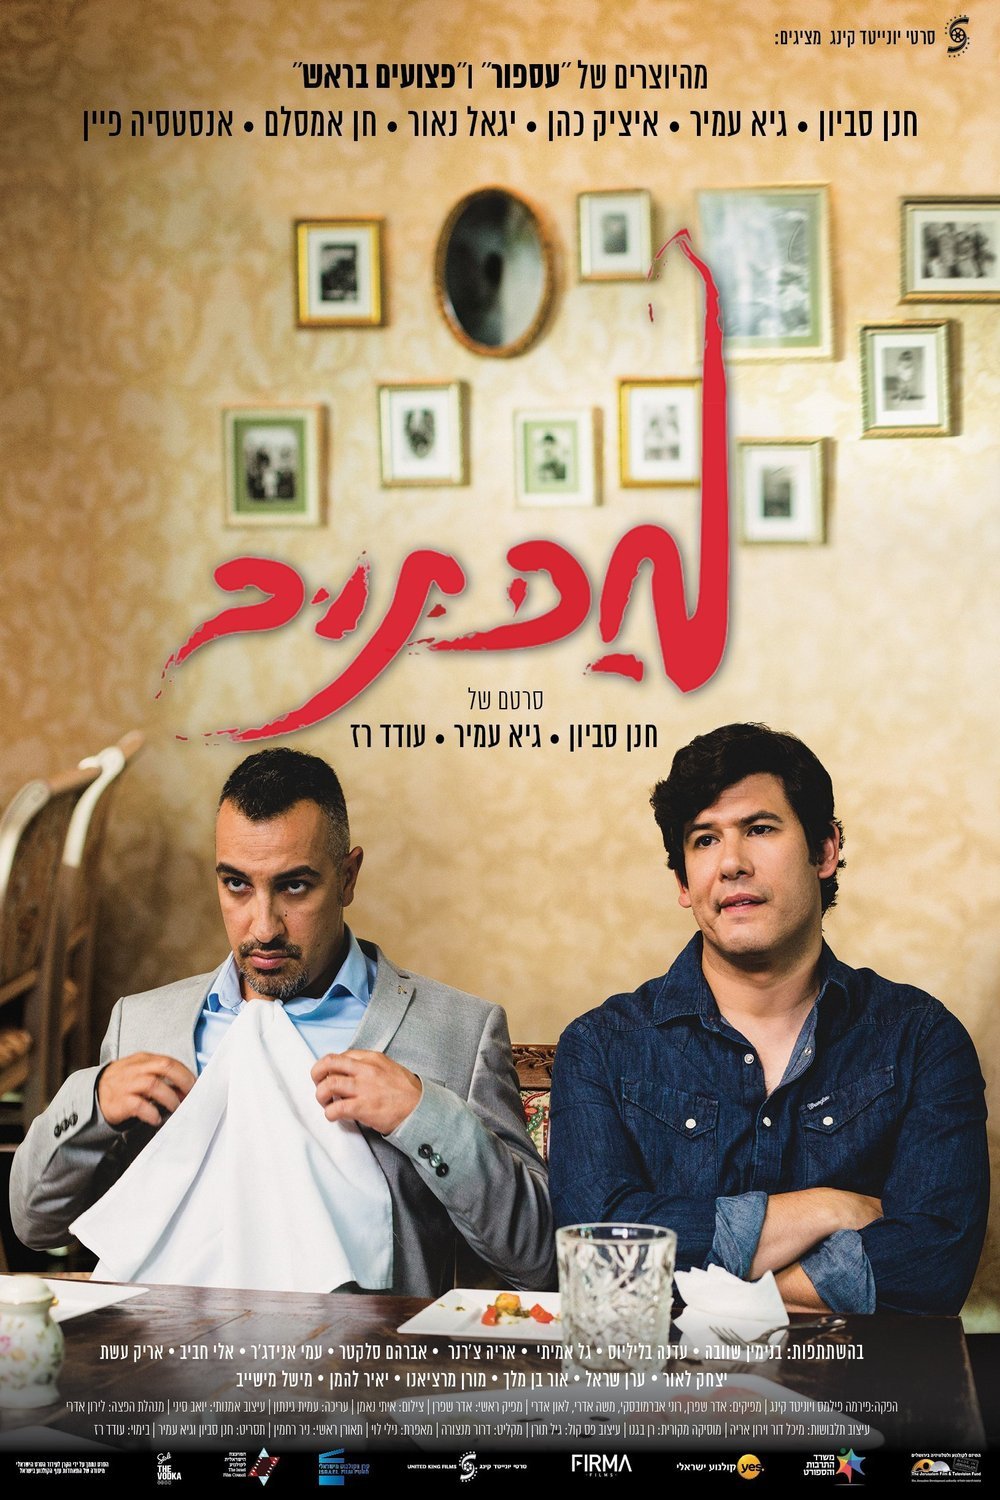 L'affiche originale du film Maktub en hébreu